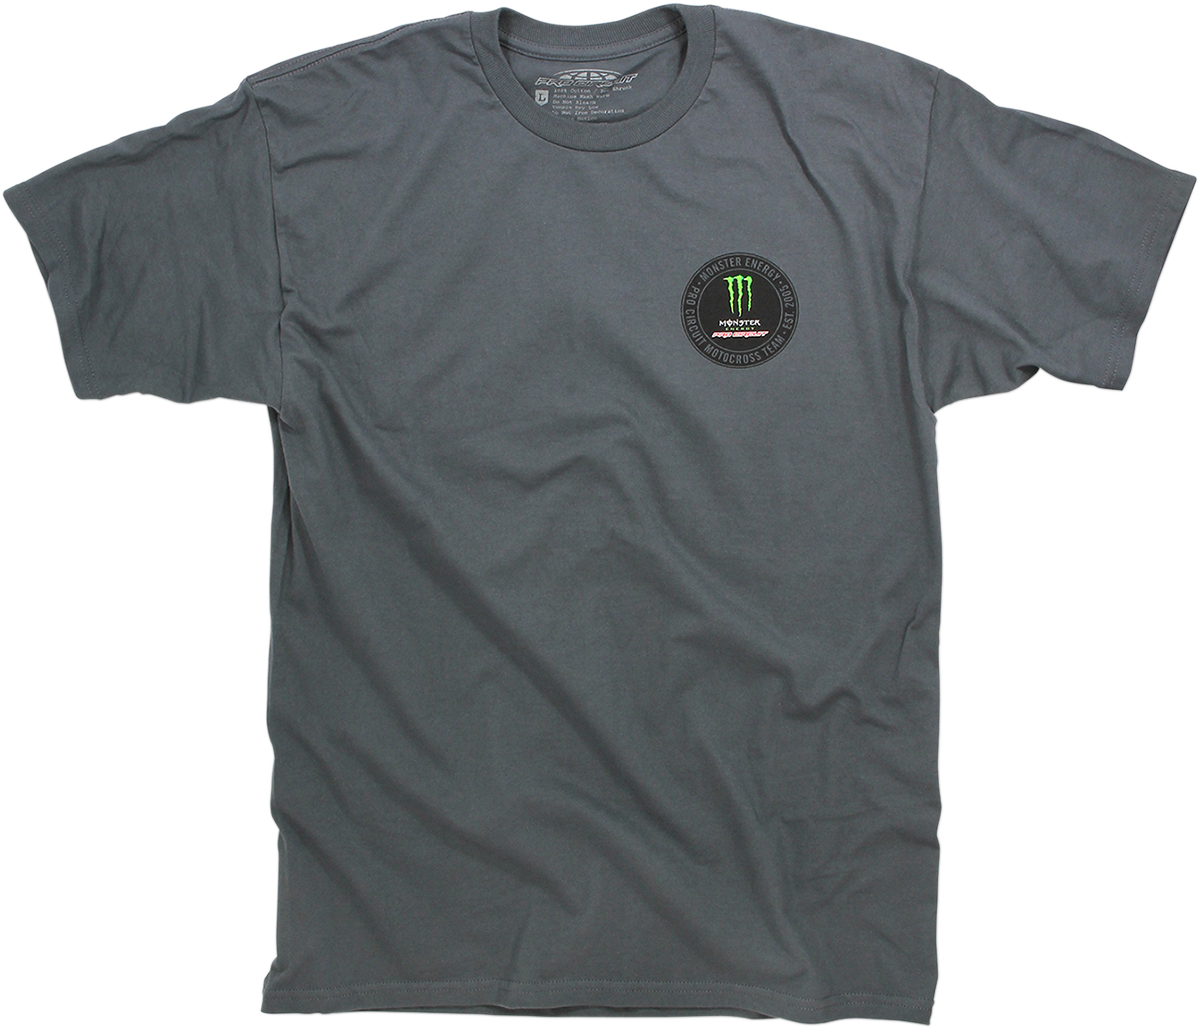 PRO CIRCUIT Patch T-Shirt - Gray - Large 6411560-030